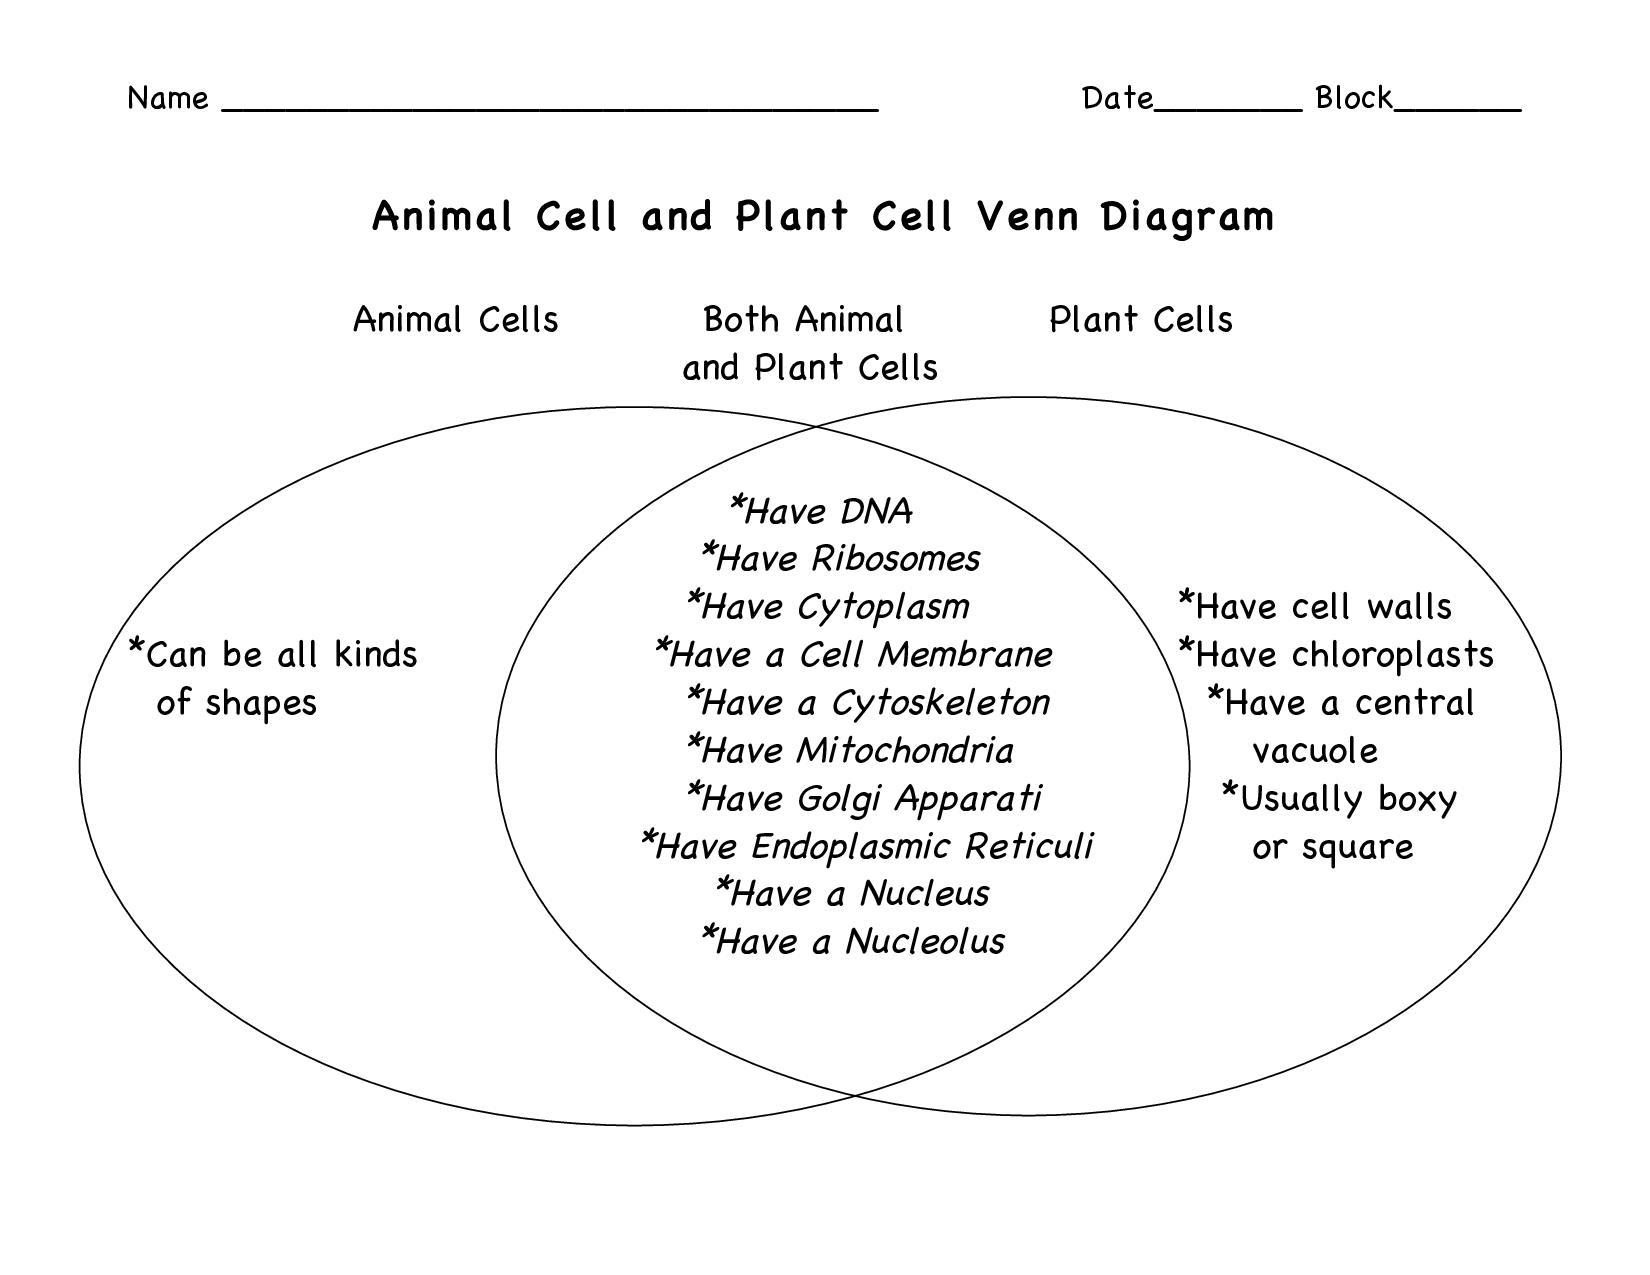 Plant and Animal Cell Venn Diagram Image